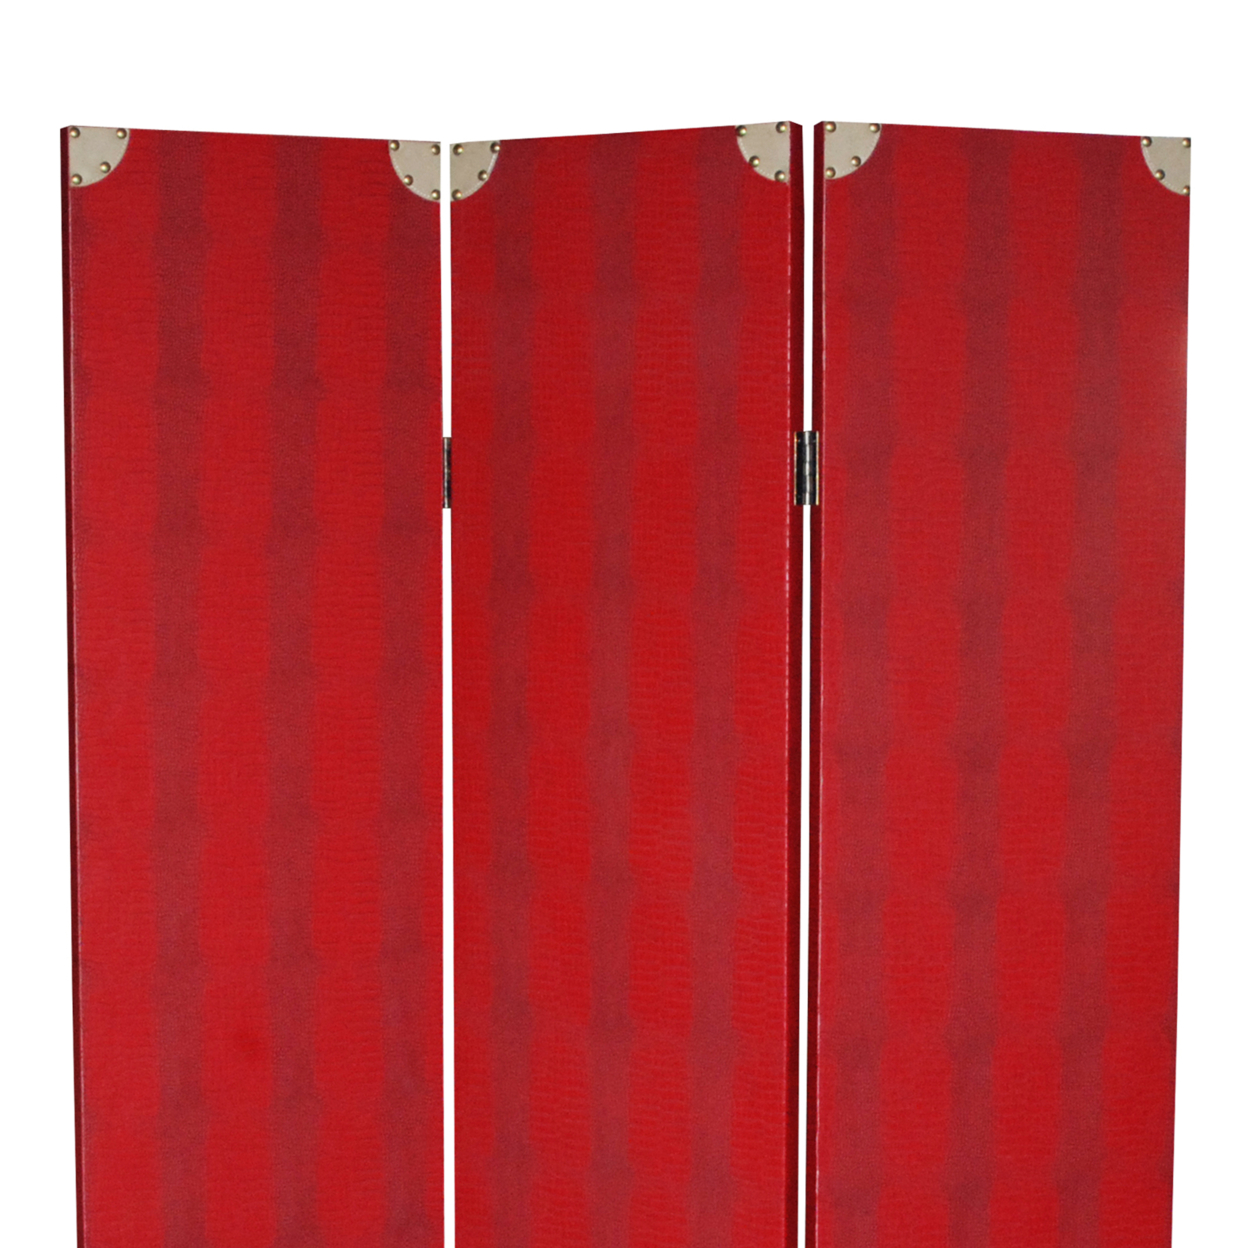 Transitional 3 Panel Wooden Screen With Nailhead Trim, Red- Saltoro Sherpi